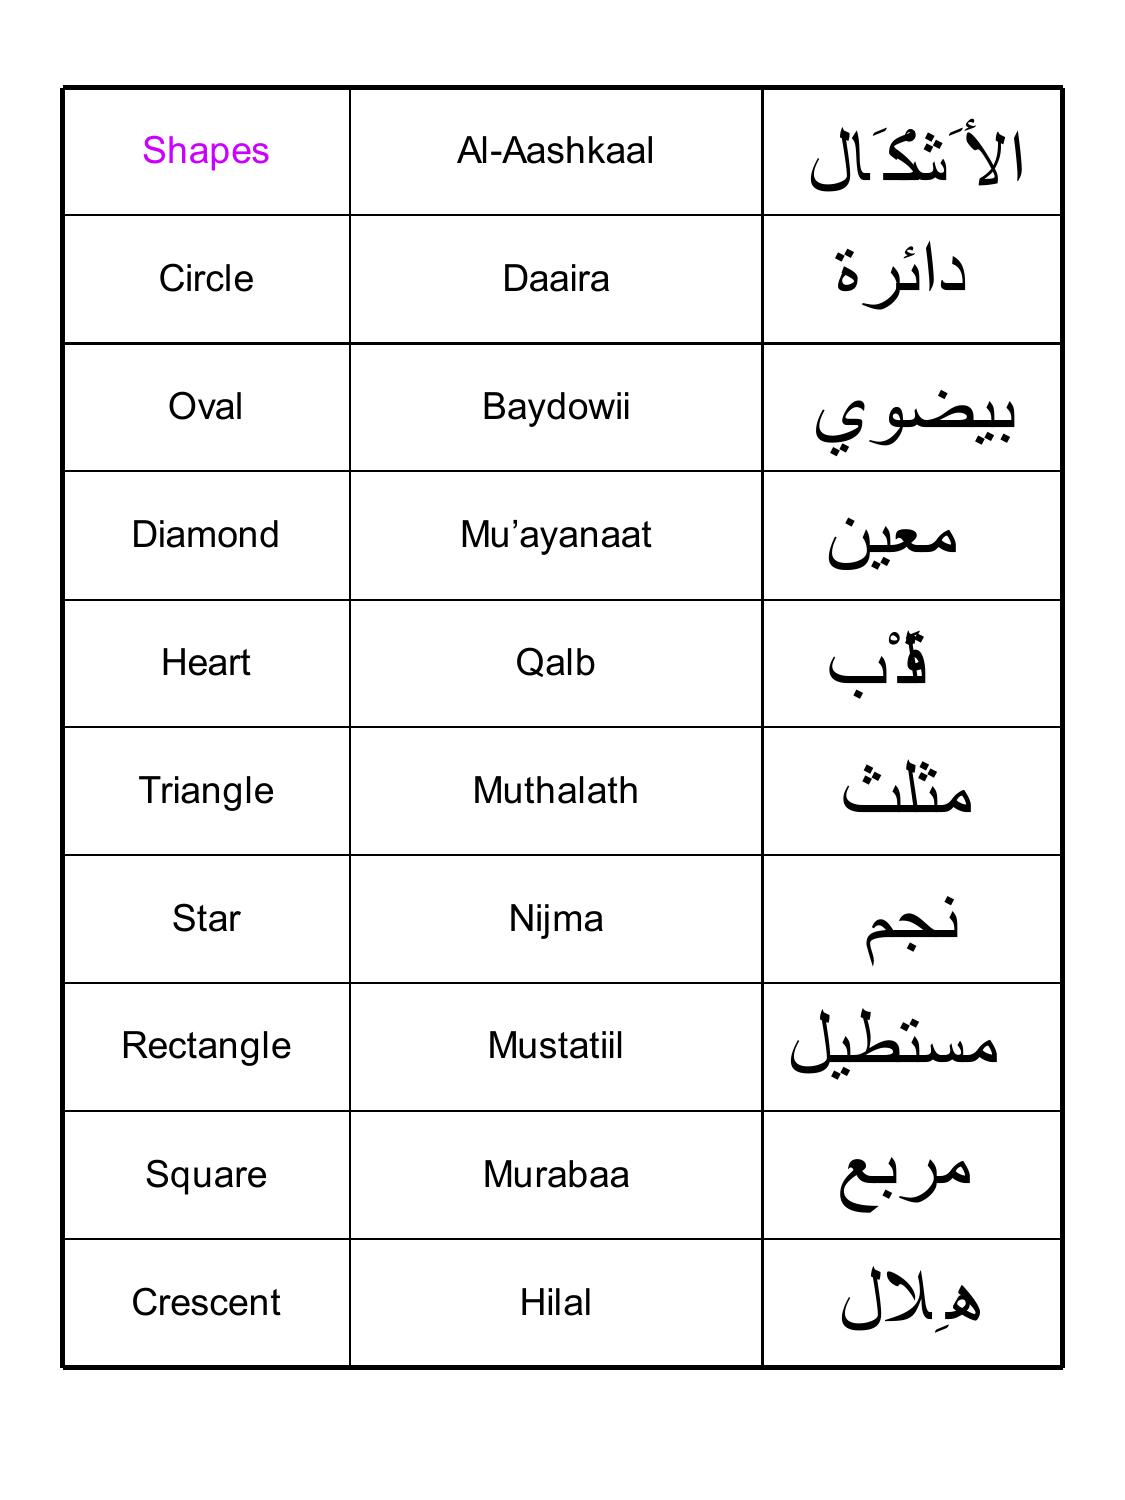 Arabic Symbols Cheat Sheet